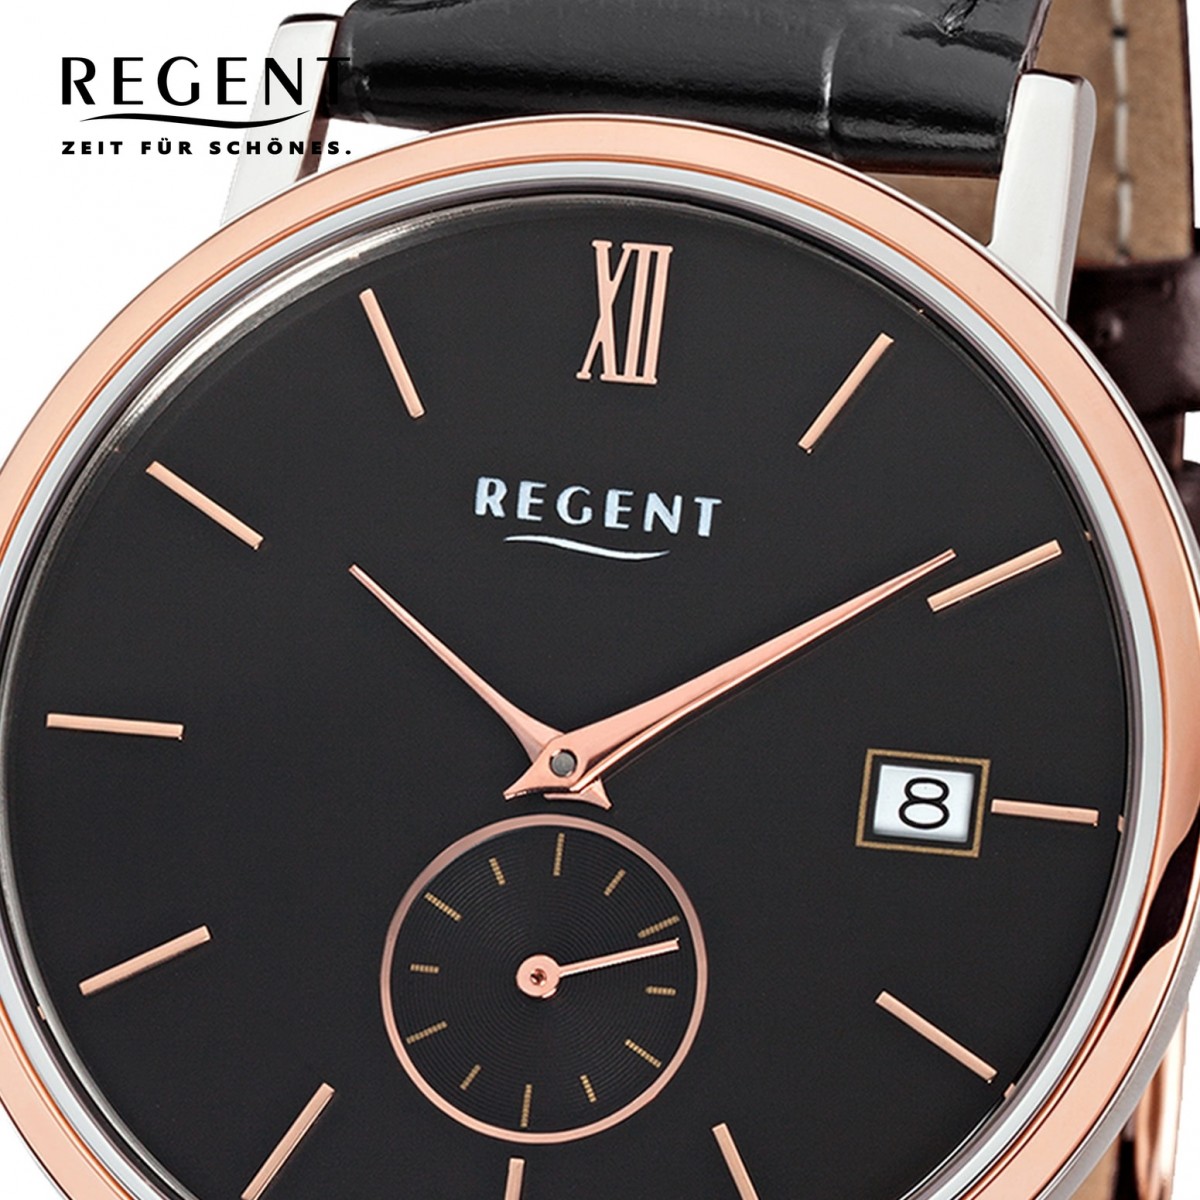 Regent Herren-Armbanduhr Quarz-Uhr Leder-Armband URGM1453 Uhr schwarz